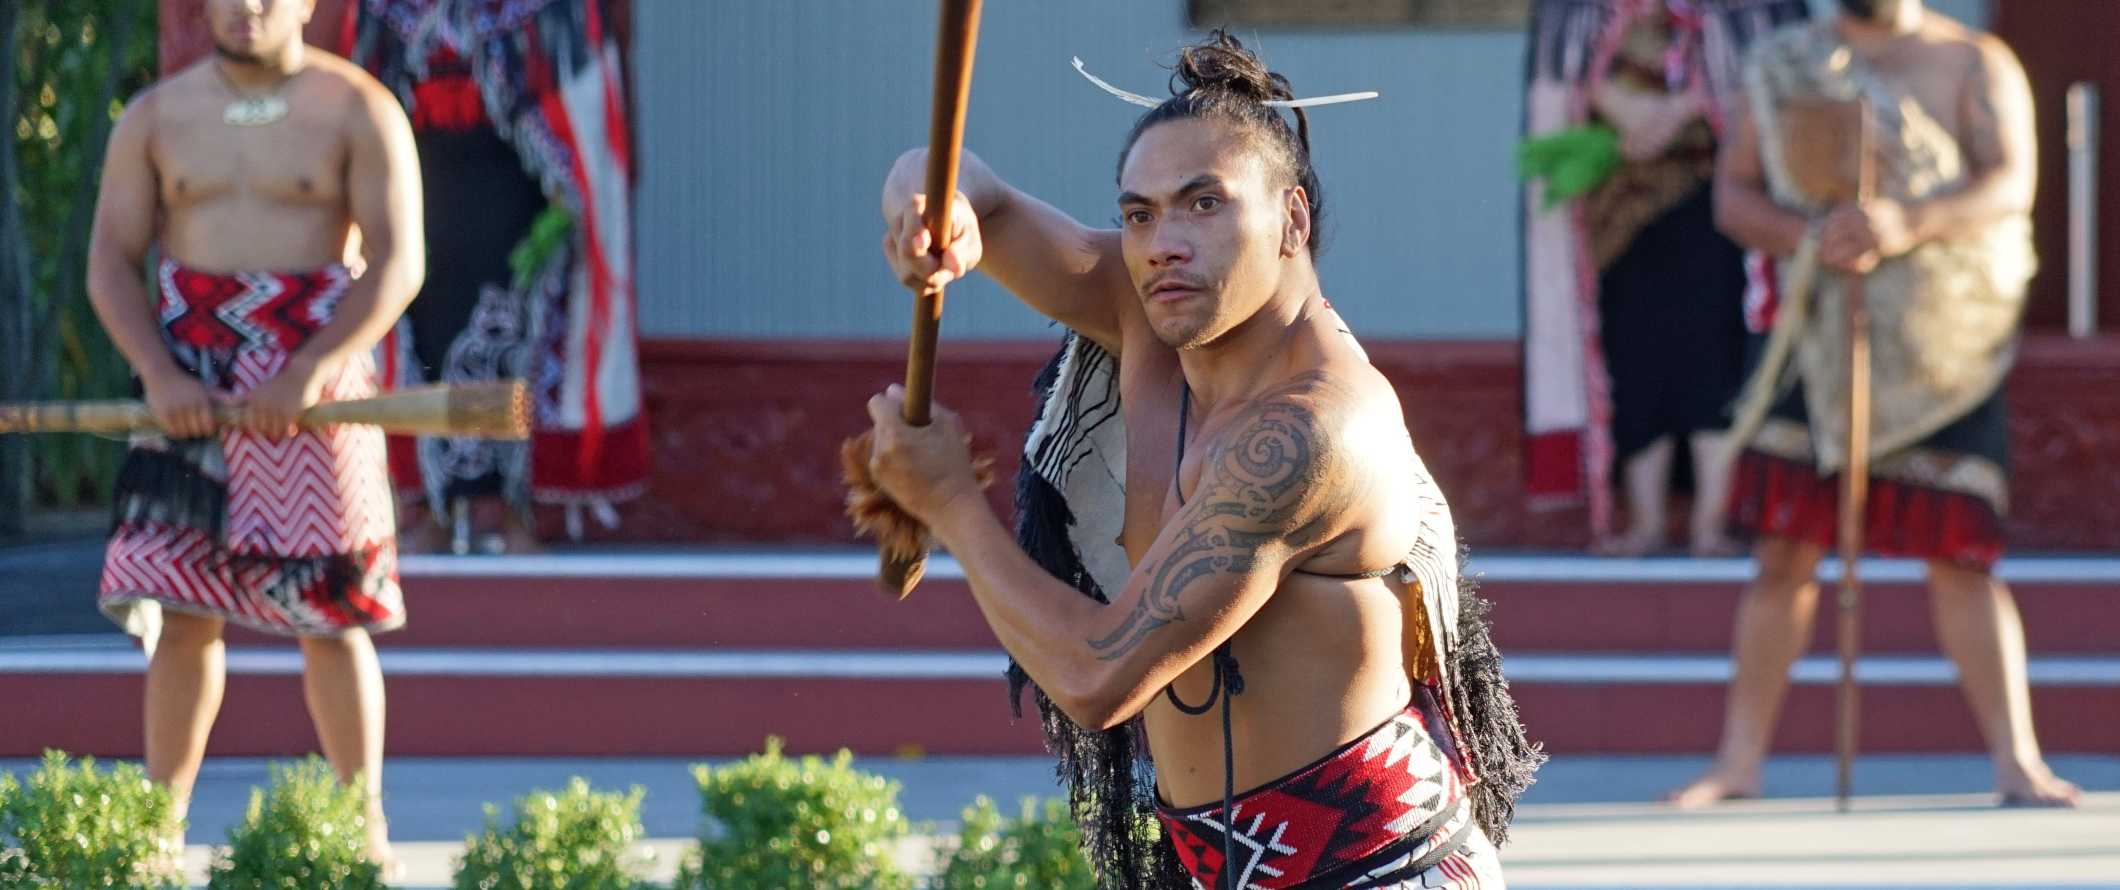 A Maori man performing a traditional dance in Rotorua, New Zealand.